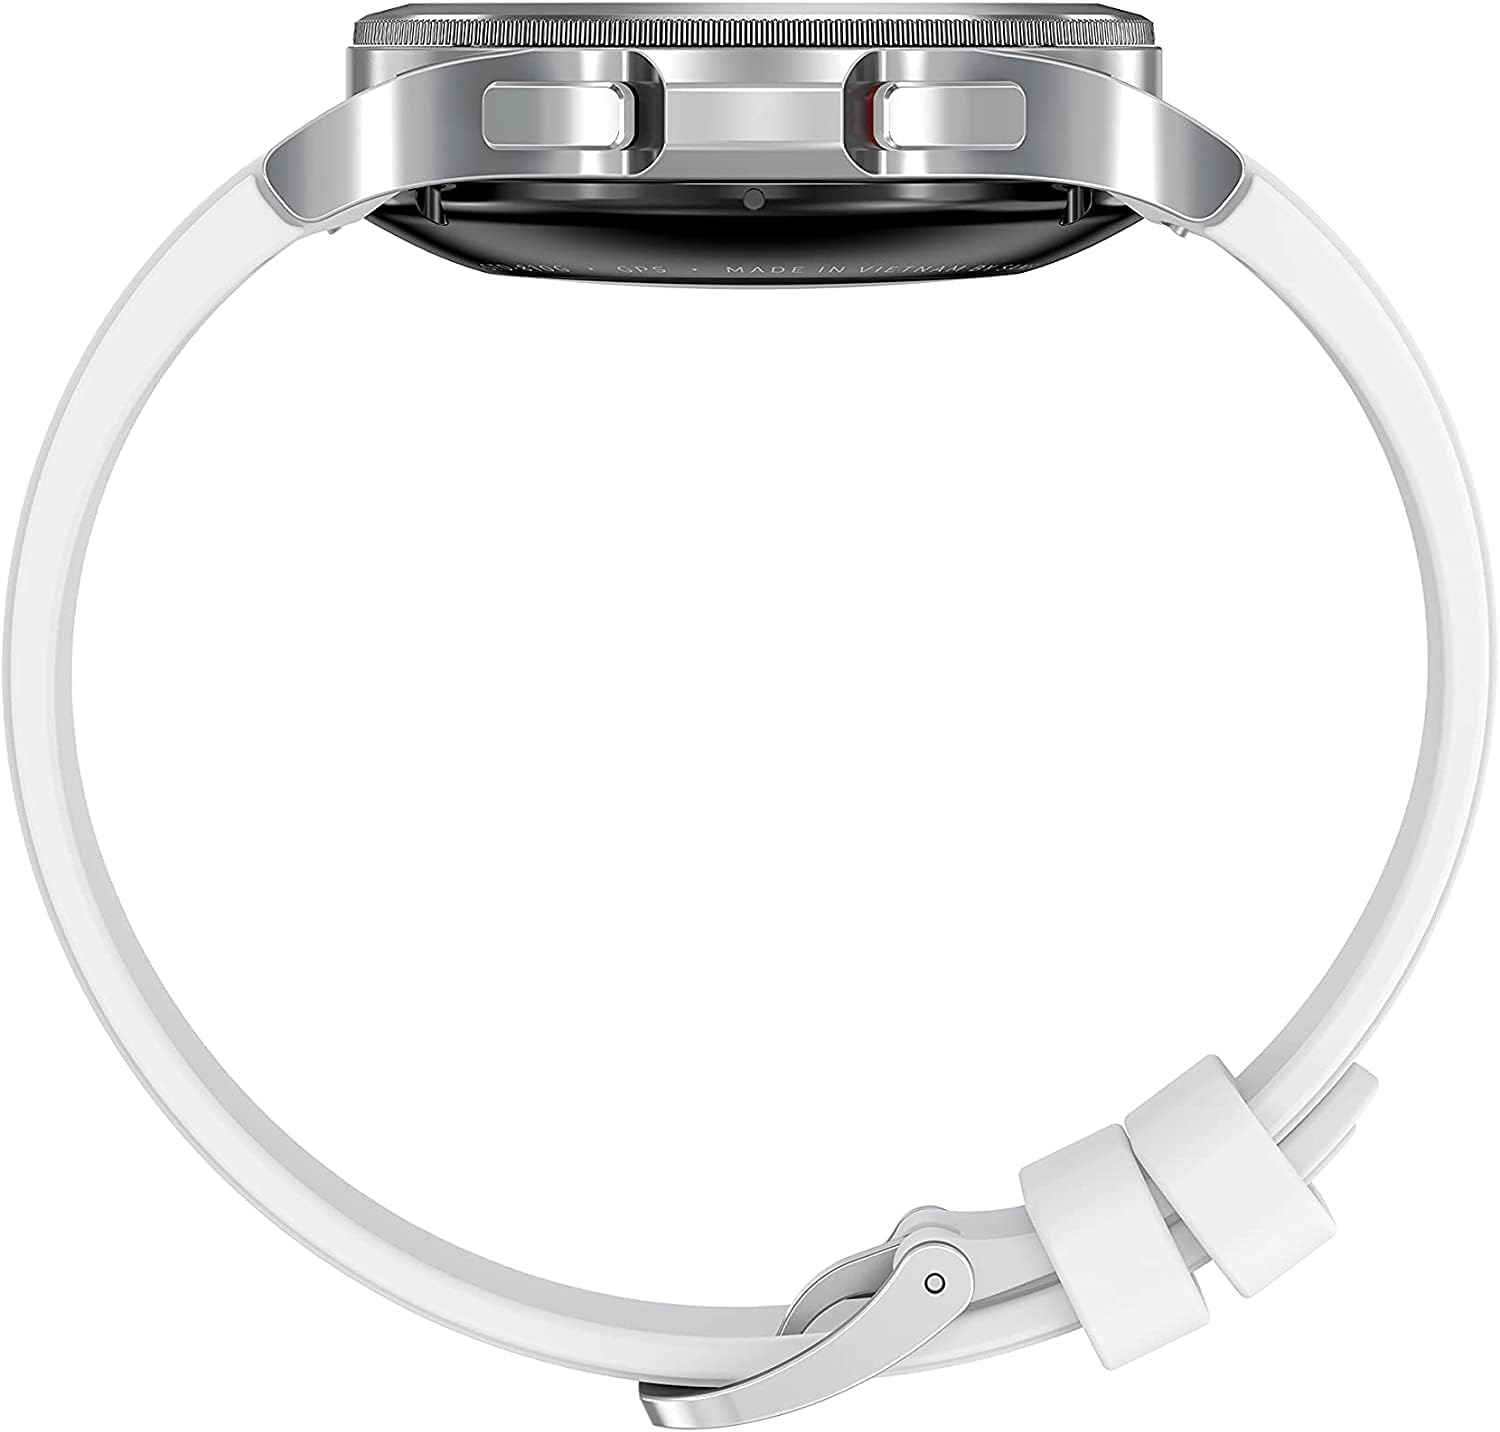 Samsung - Galaxy Watch4 Classic Stainless Steel Smartwatch 42mm BT - Silver - $210